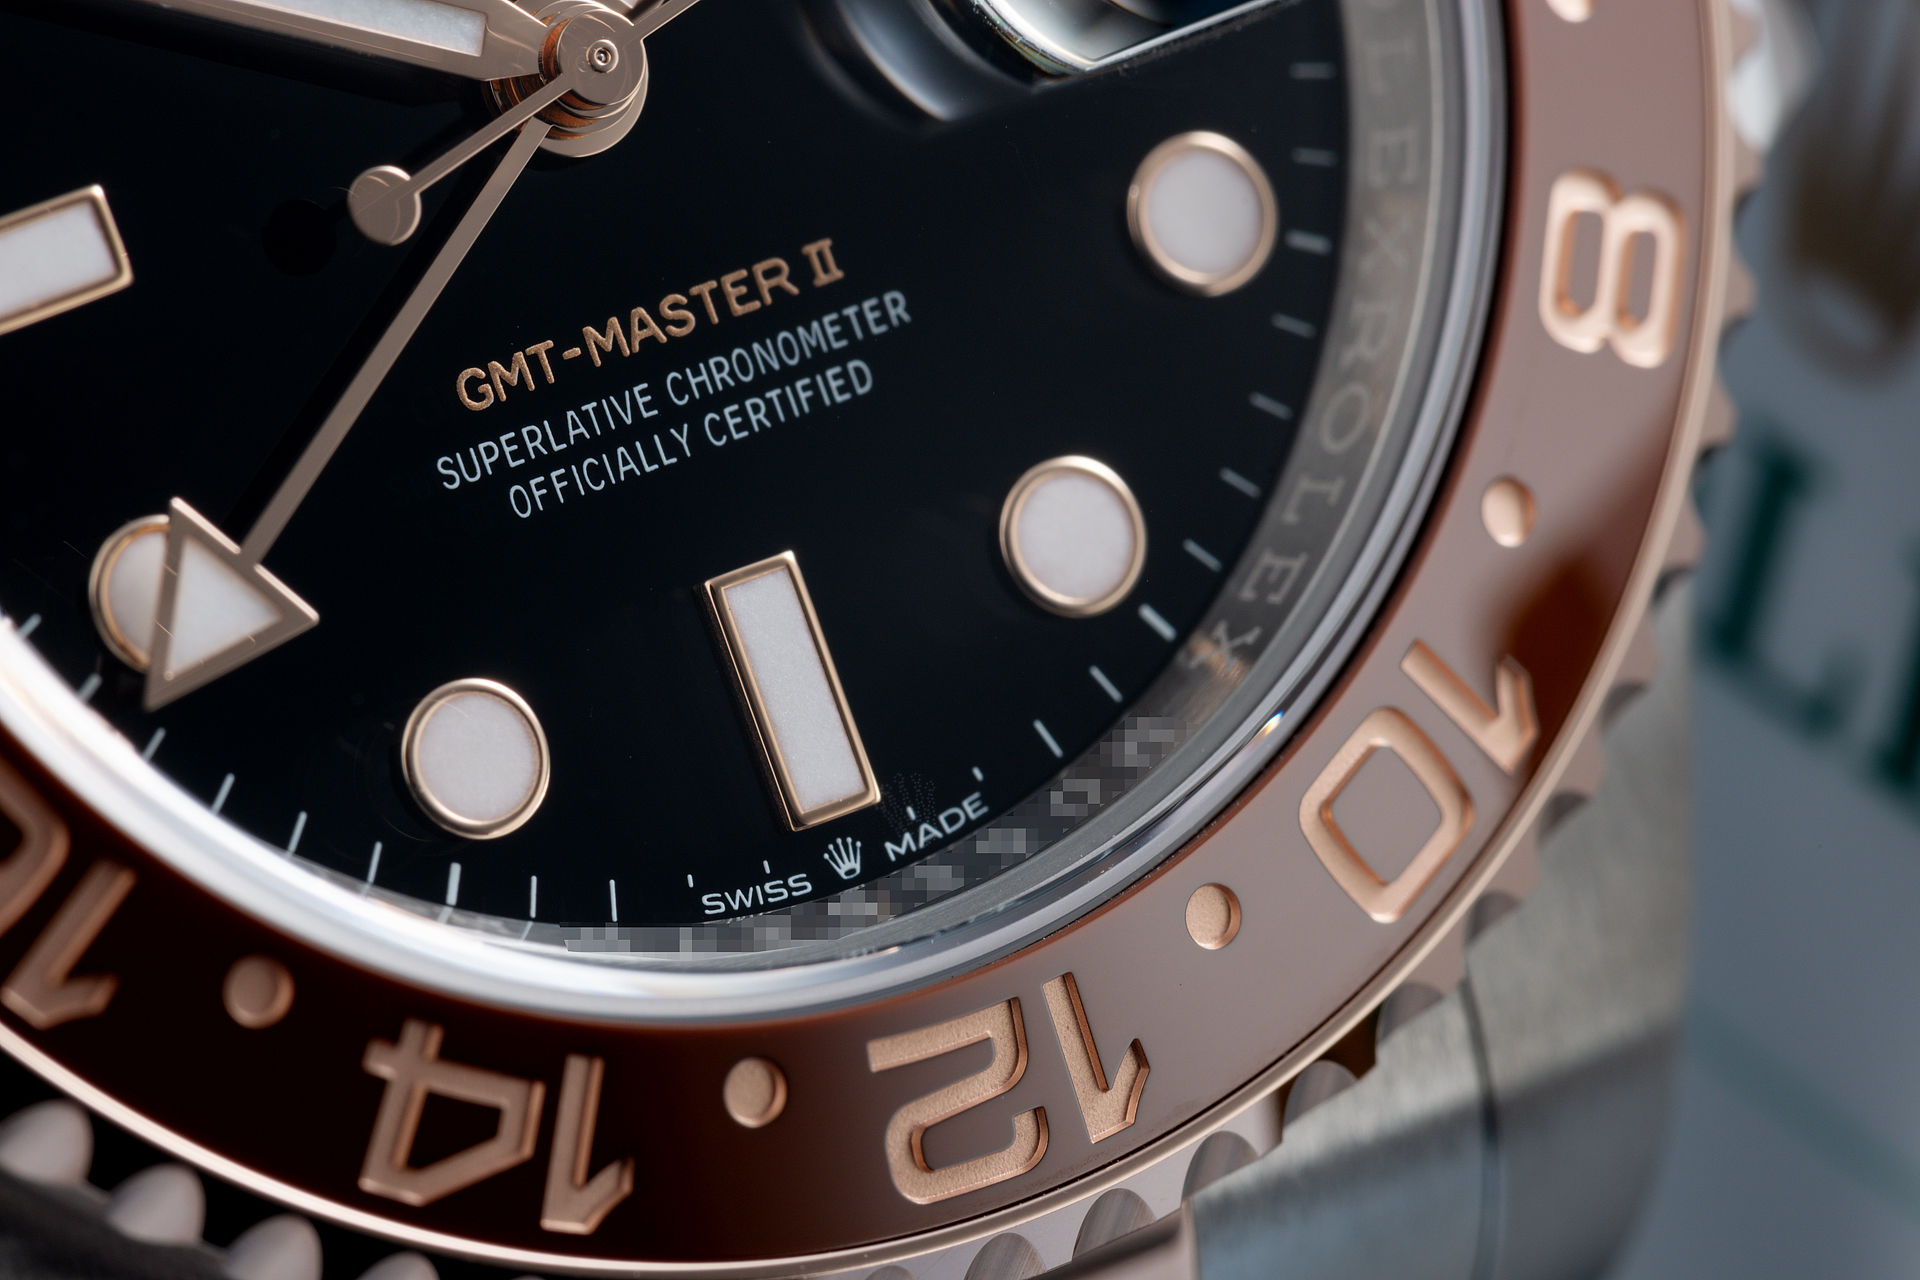 ref 126711CHNR | Brand New 5 Year Rolex Warranty | Rolex GMT-Master II